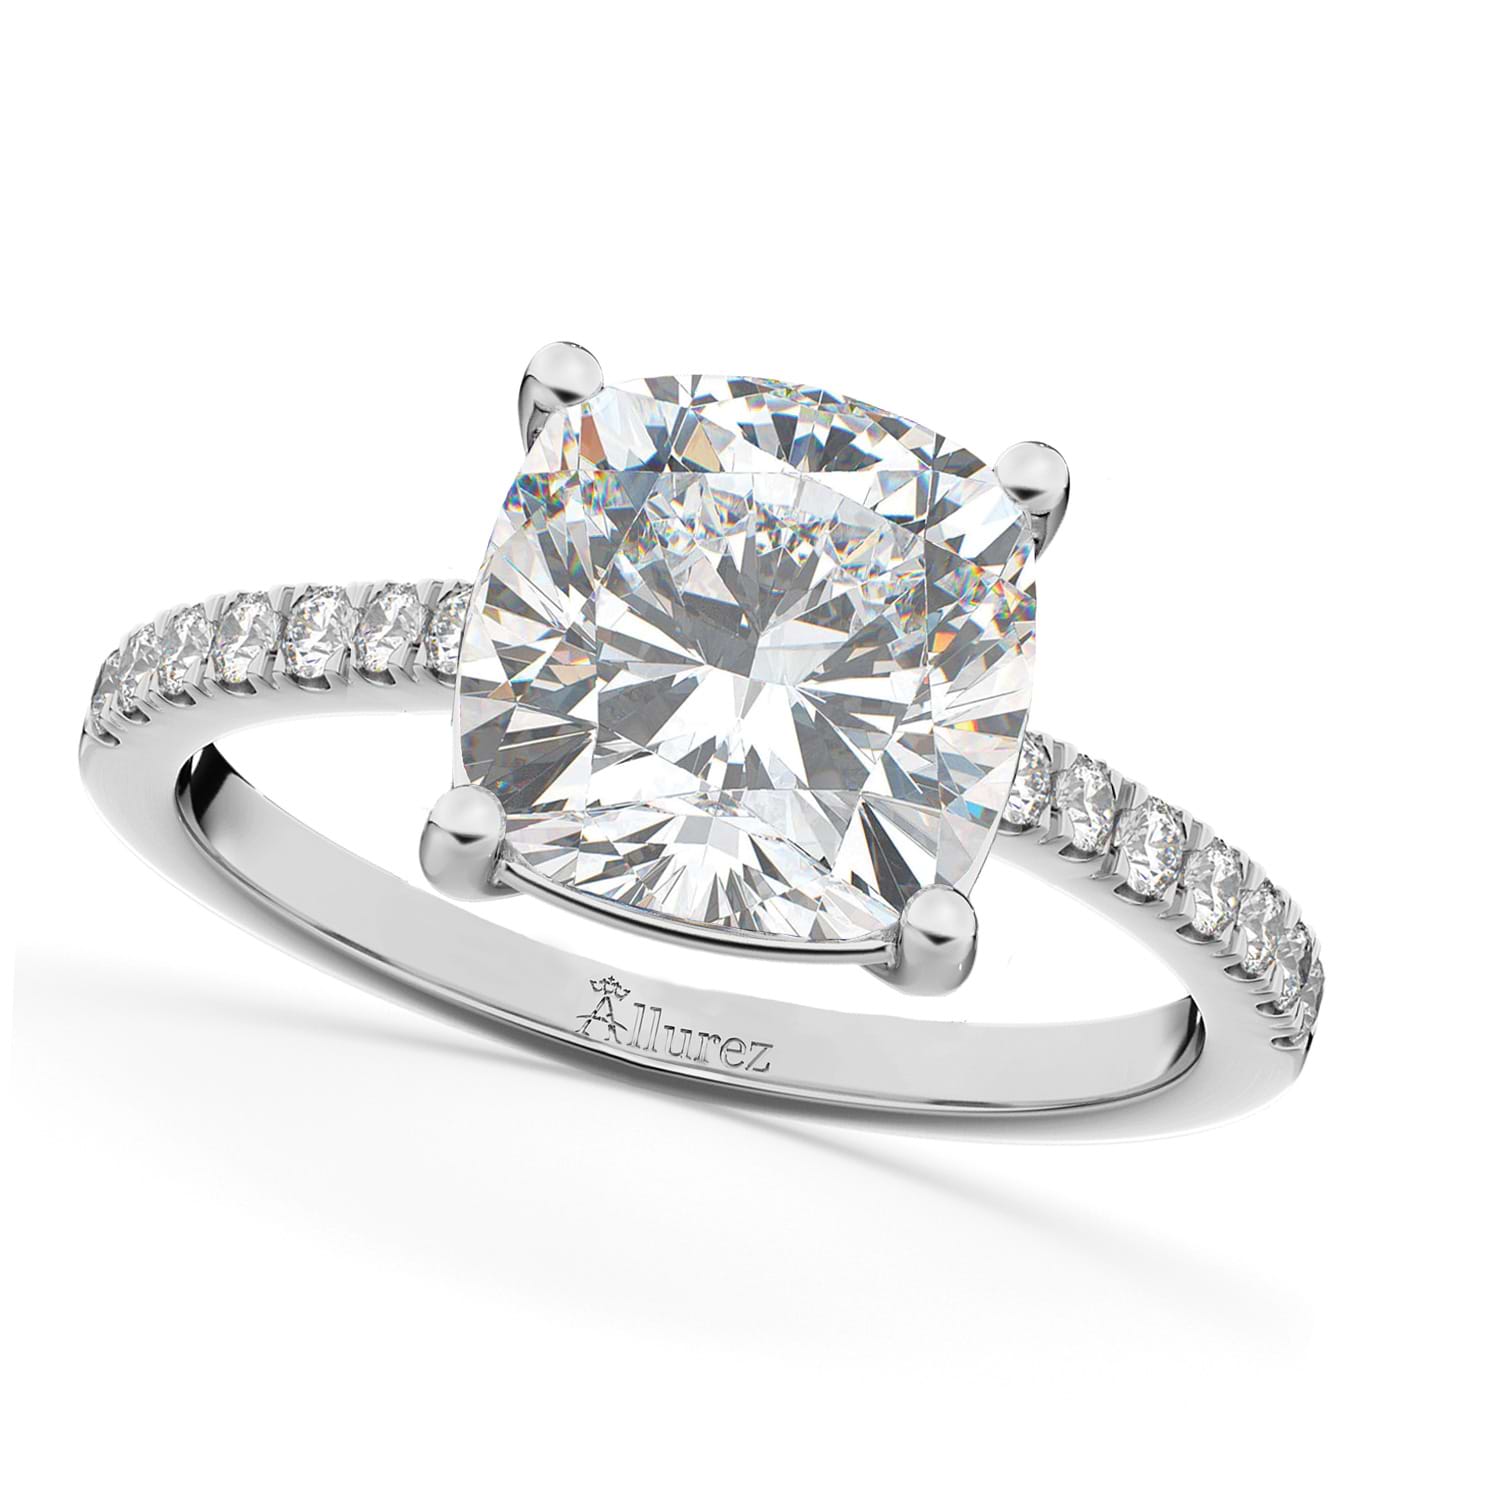 Cushion Cut Lab Grown Diamond Engagement Ring 14k White Gold (2.25ct)